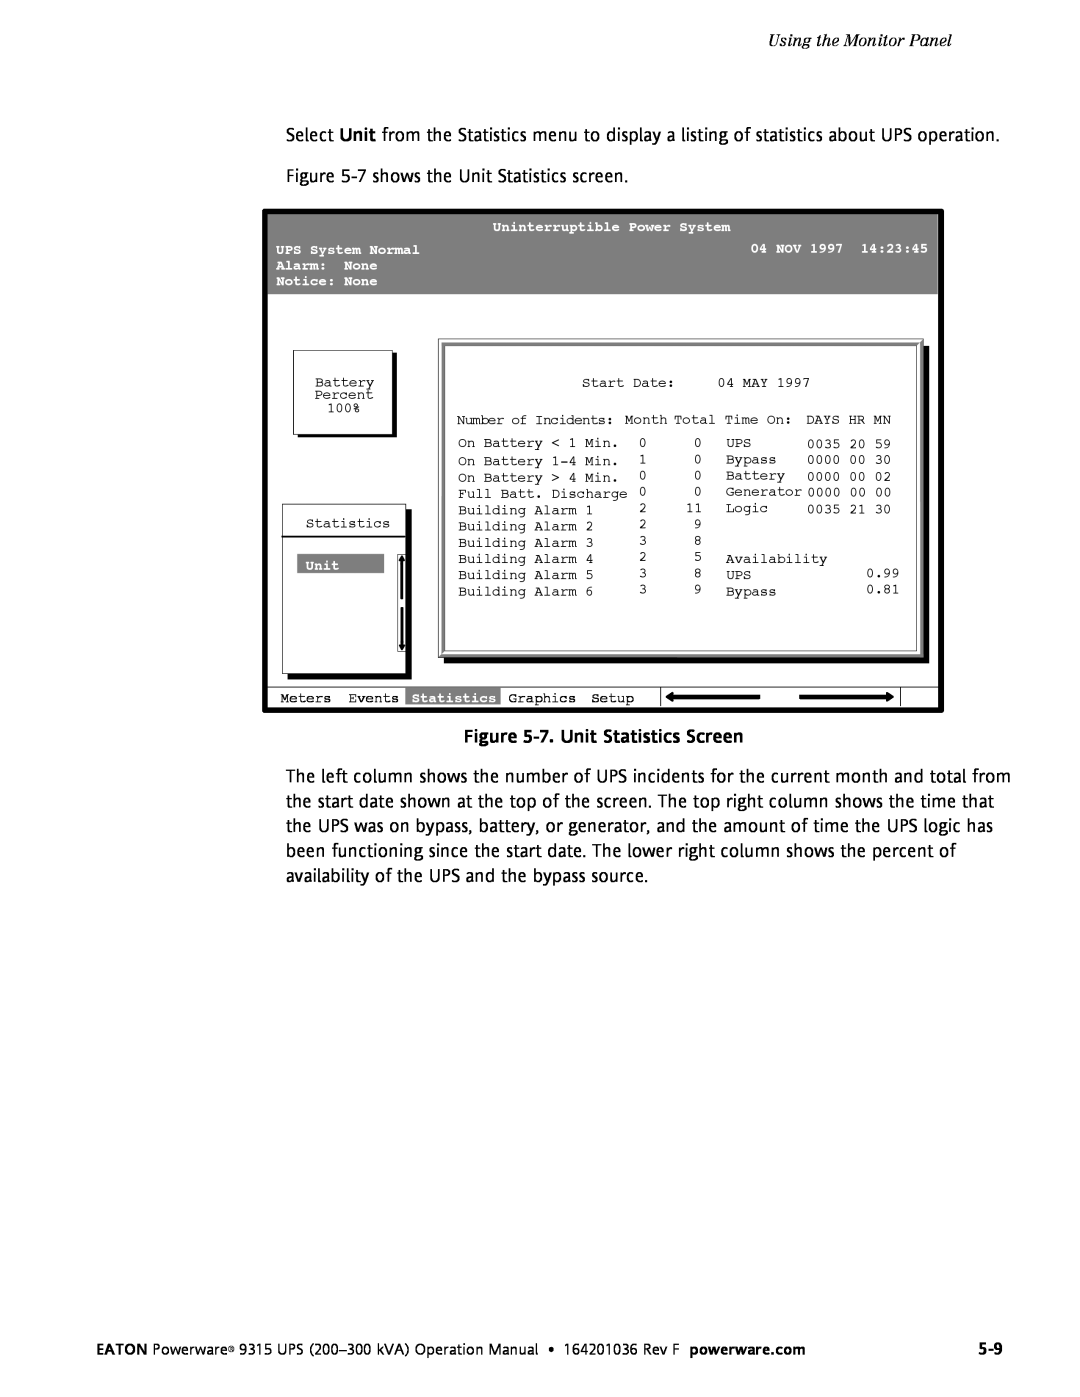 Eaton Electrical Powerware 9315 operation manual 7. Unit Statistics Screen 